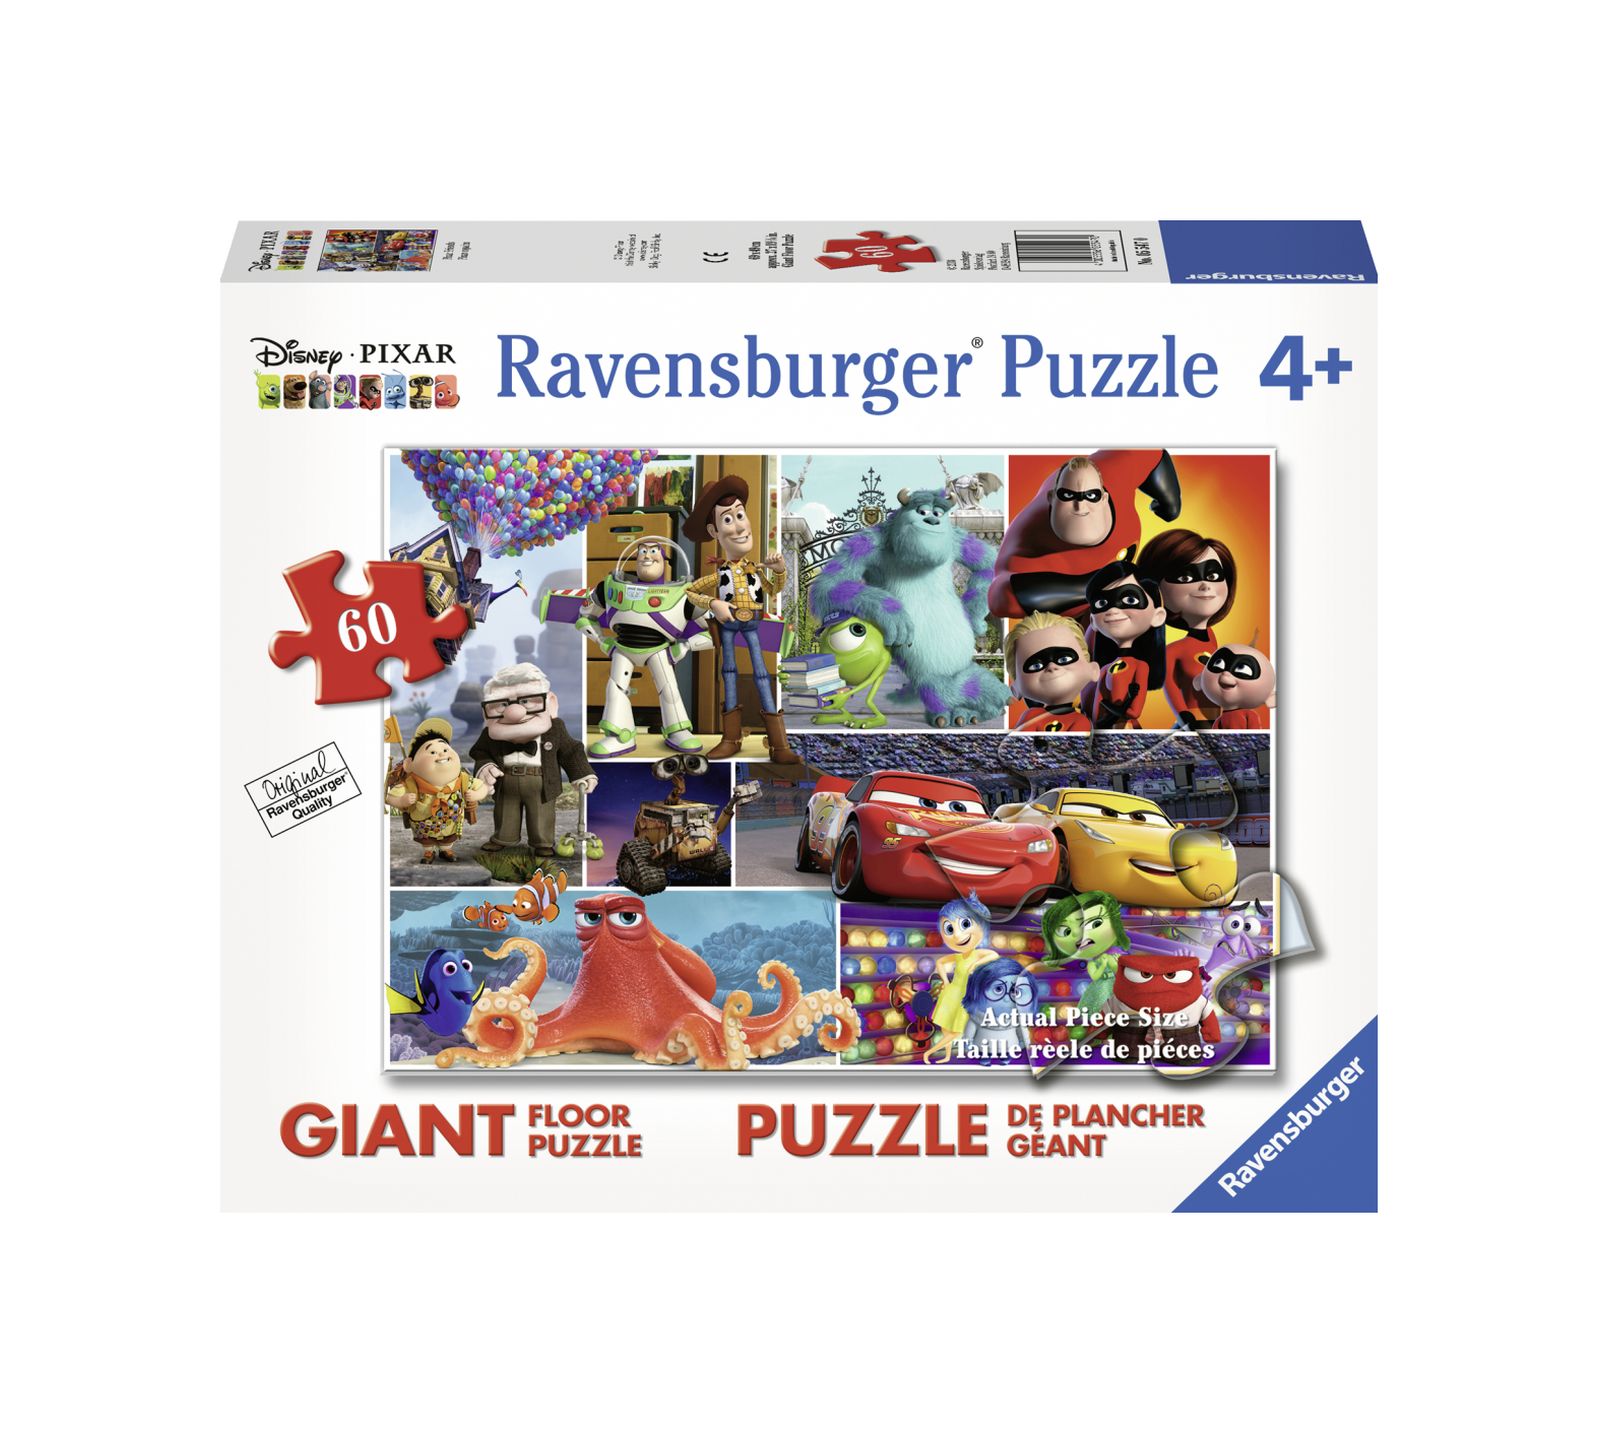 Ravensburger puzzle 60 pezzi giant - disney pixar - Lightyear, RAVENSBURGER, Cars